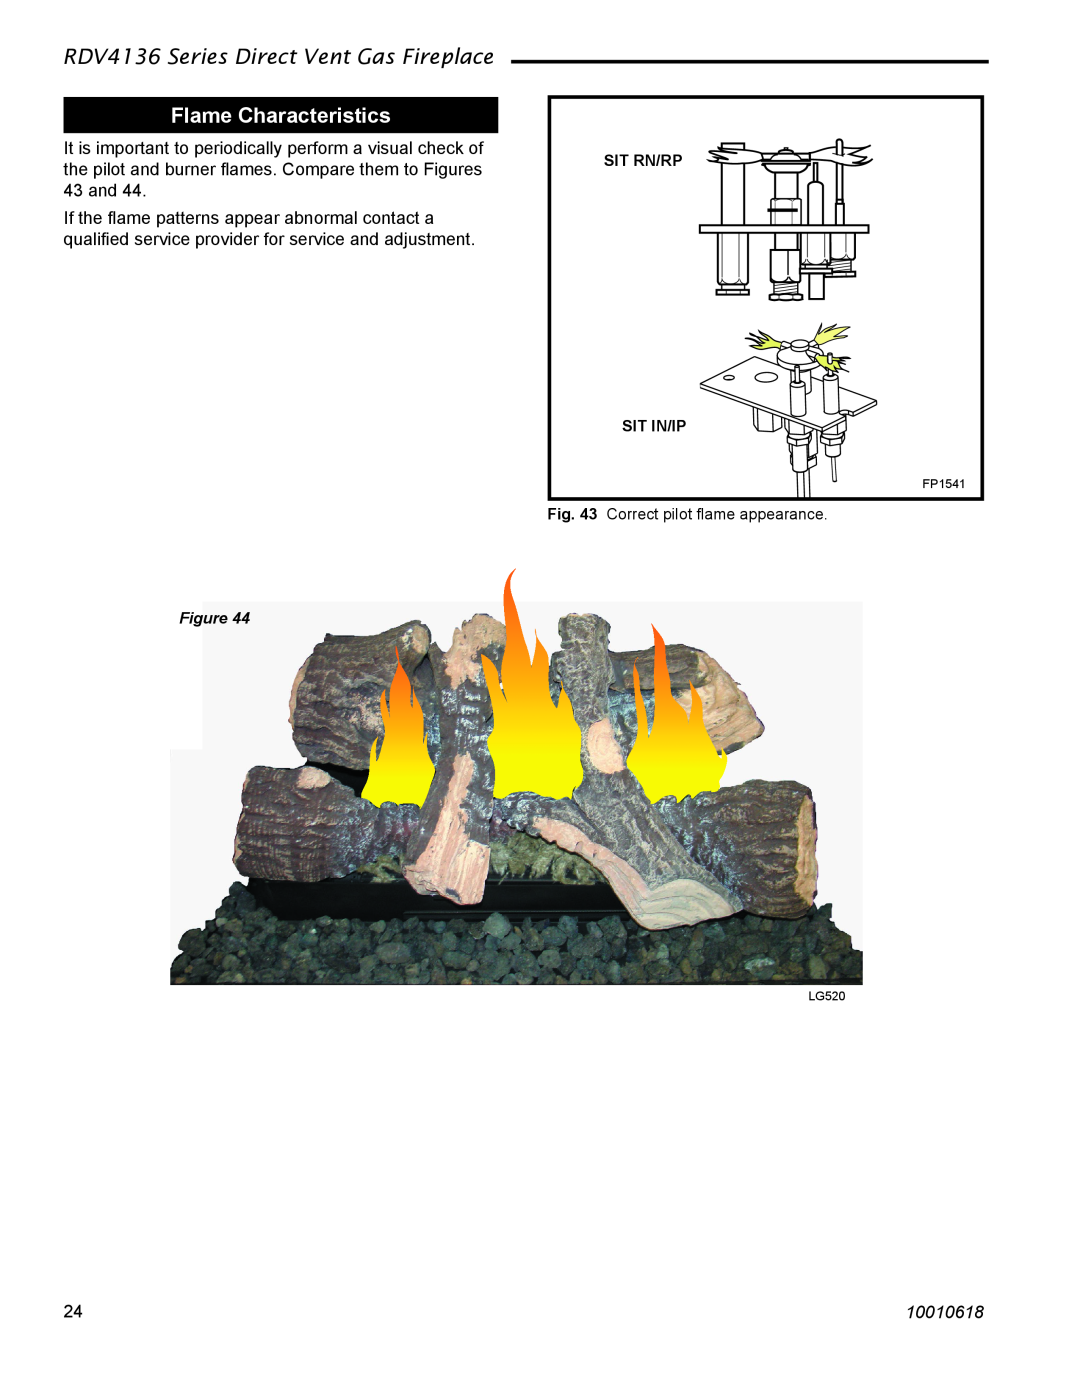 Majestic Appliances installation instructions Flame Characteristics, RDV4136 Series Direct Vent Gas Fireplace, 10010618 